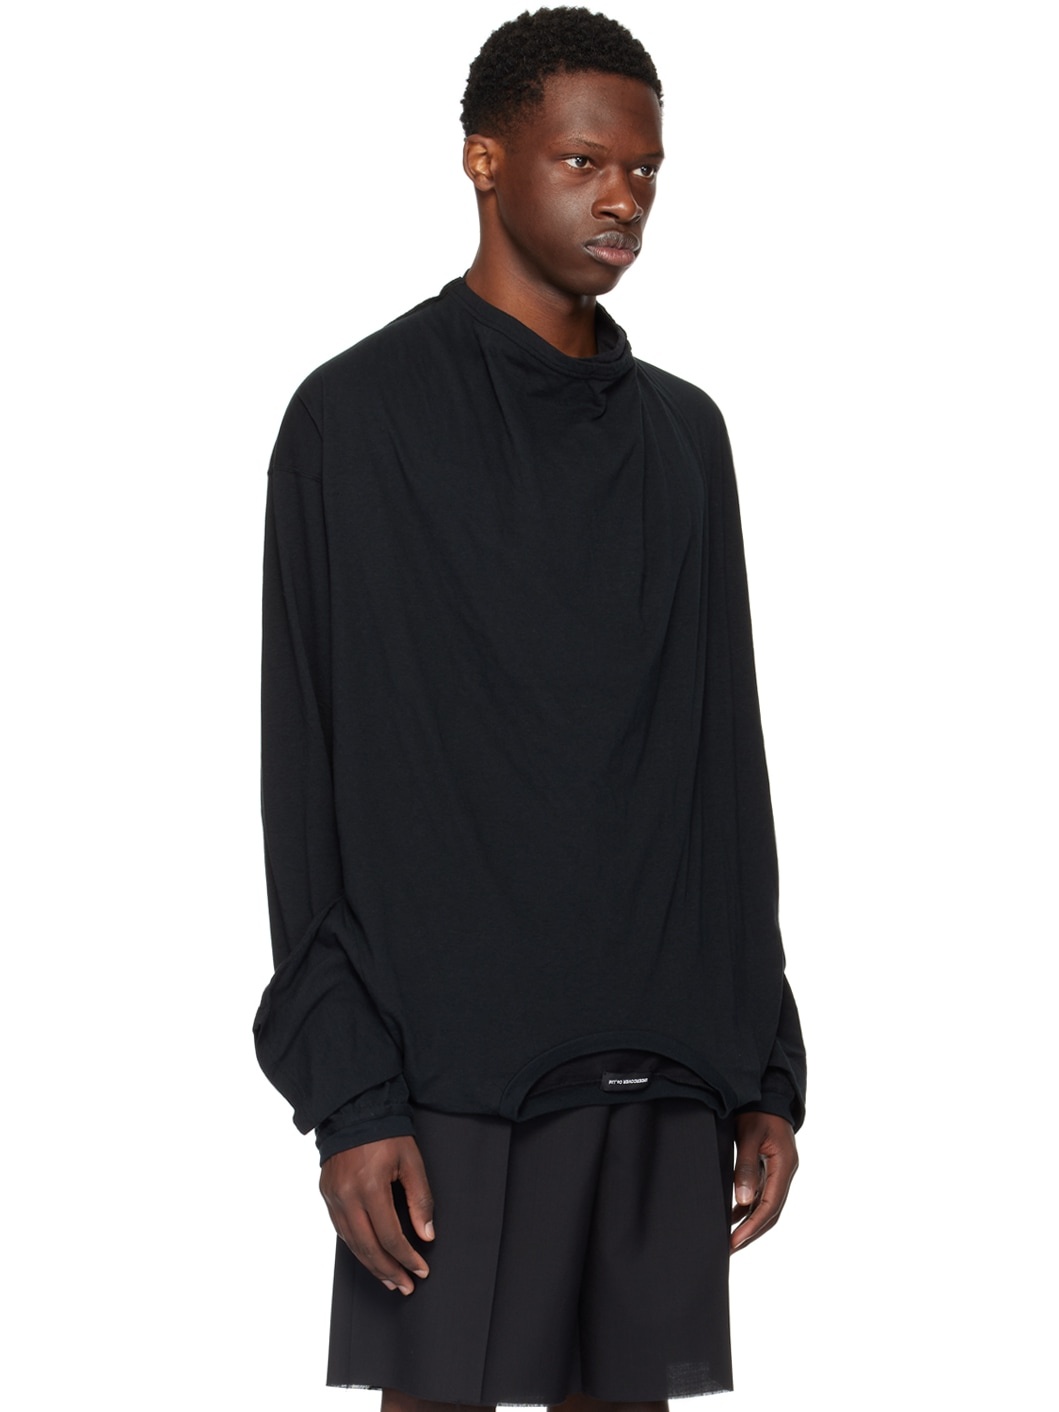 Black Layered Sweatshirt - 2